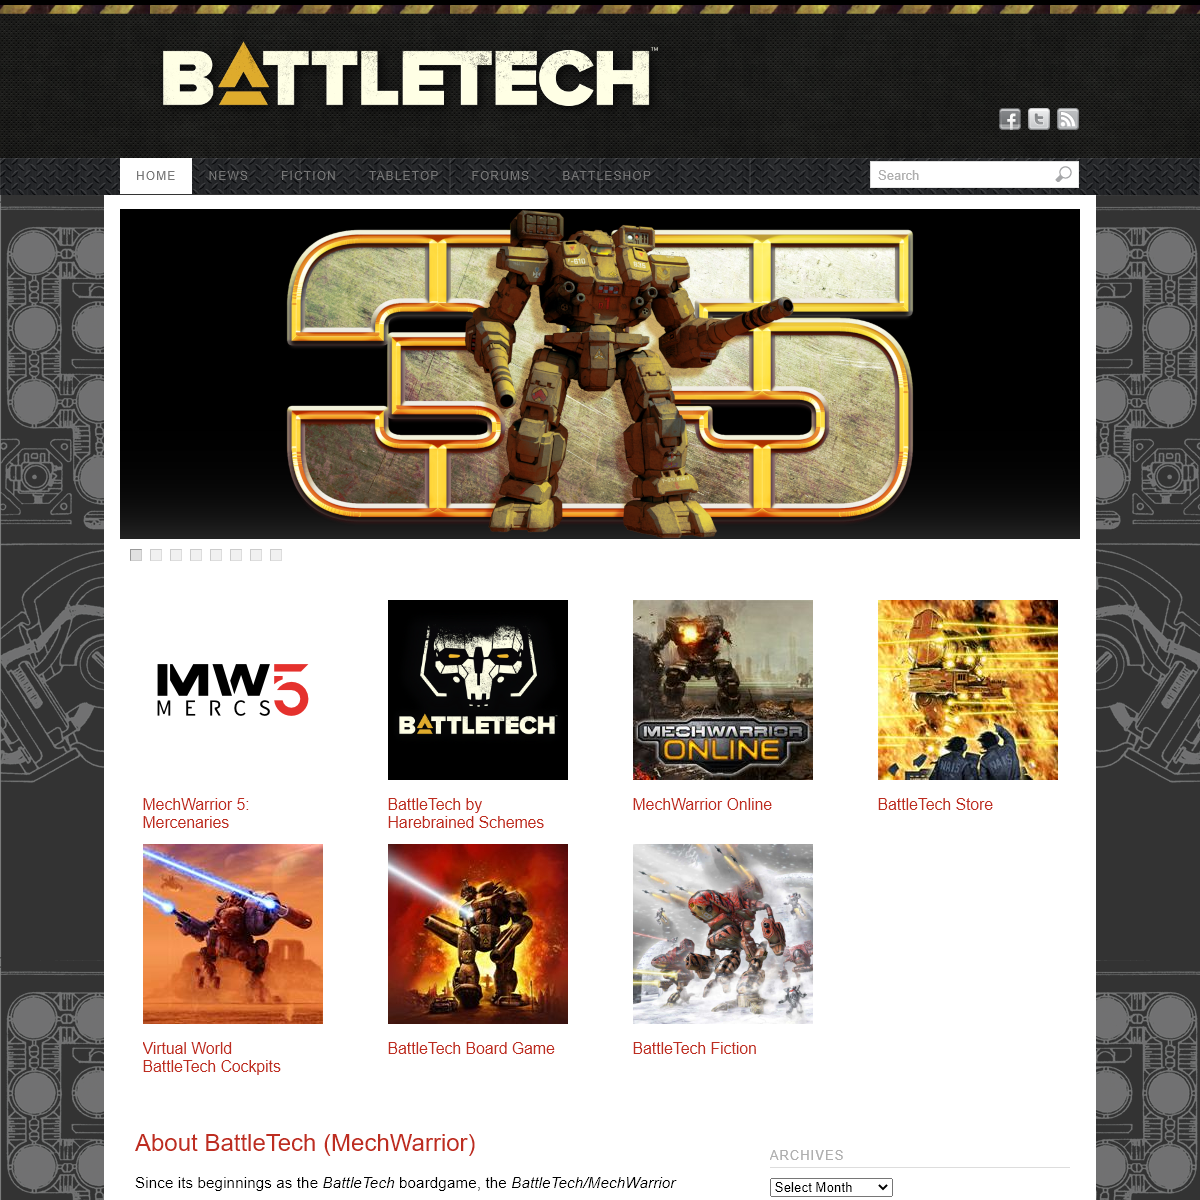 A complete backup of battletech.com